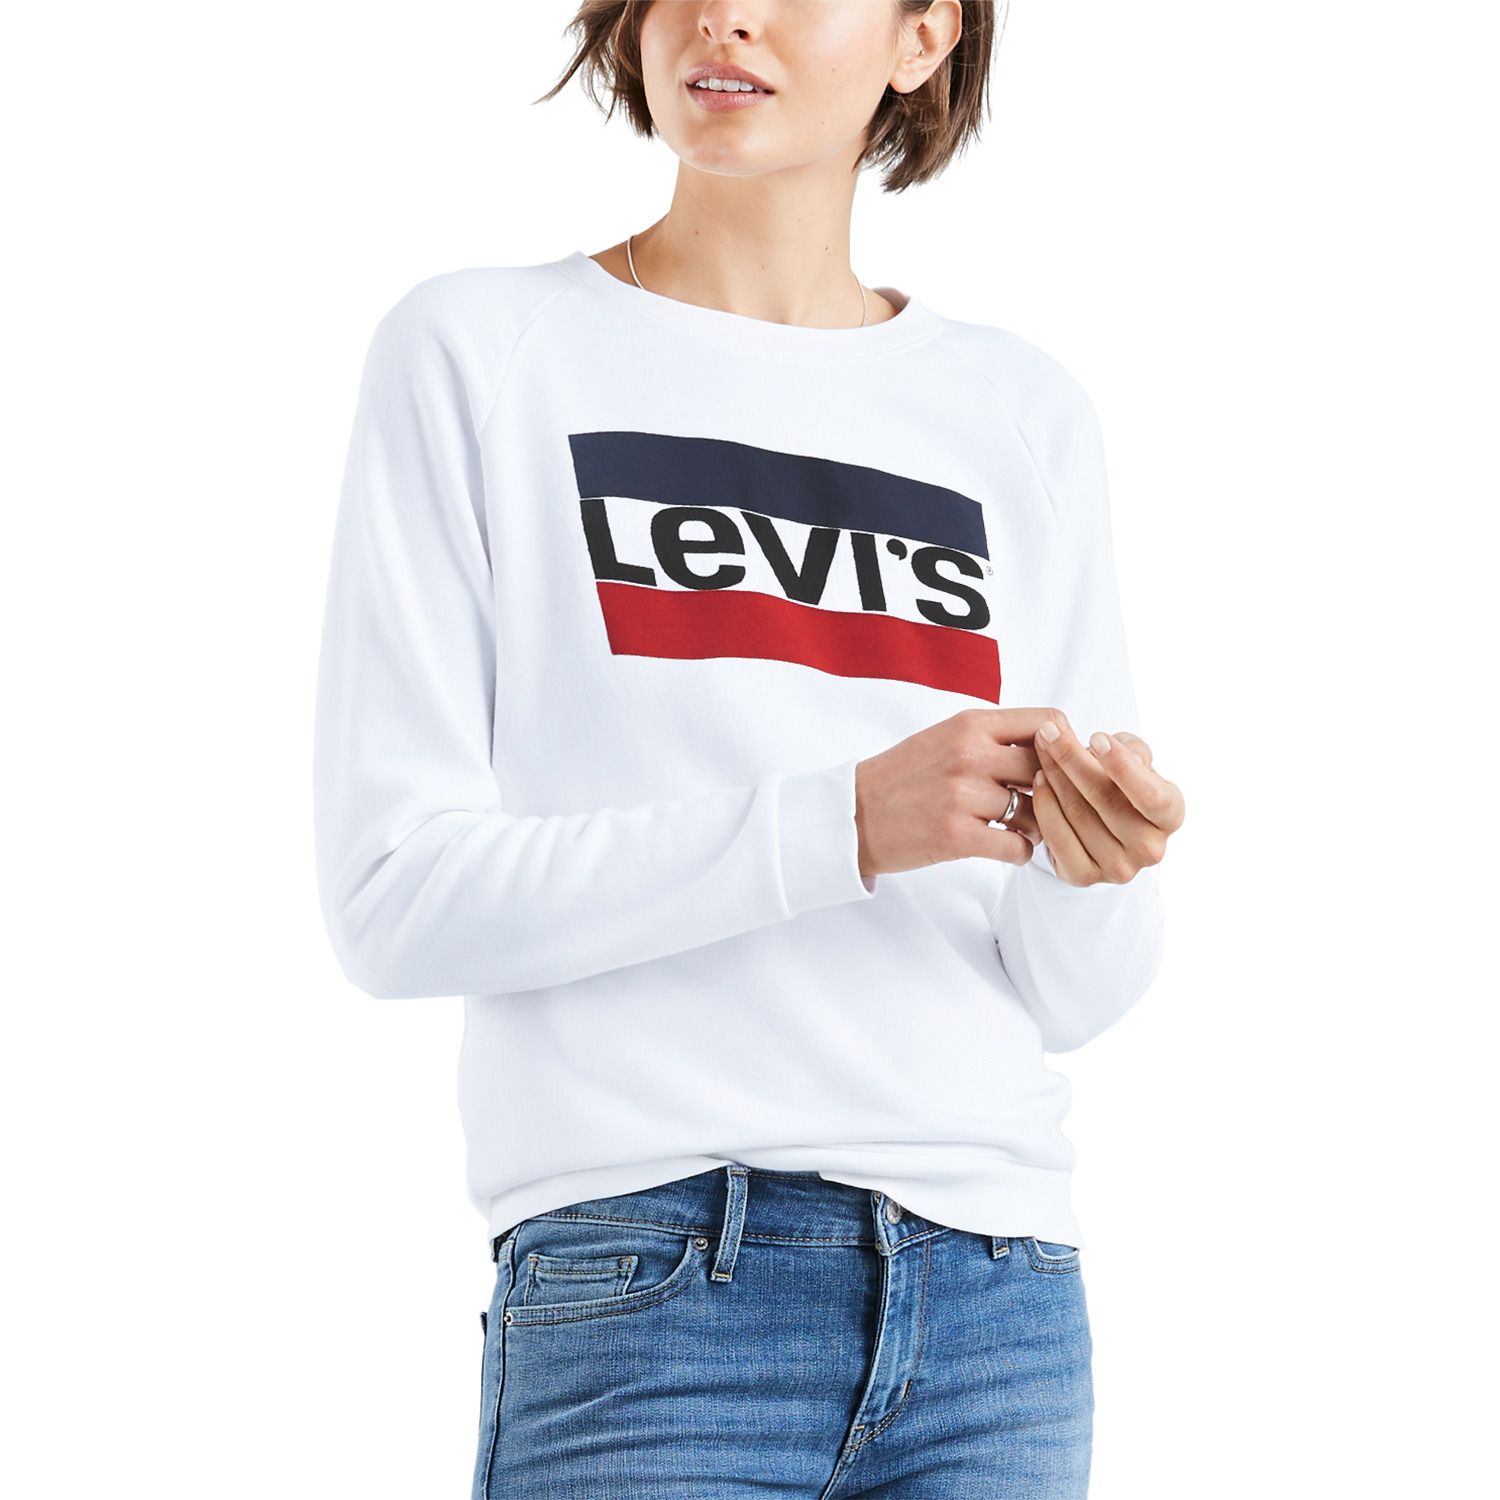 levis white sweatshirt